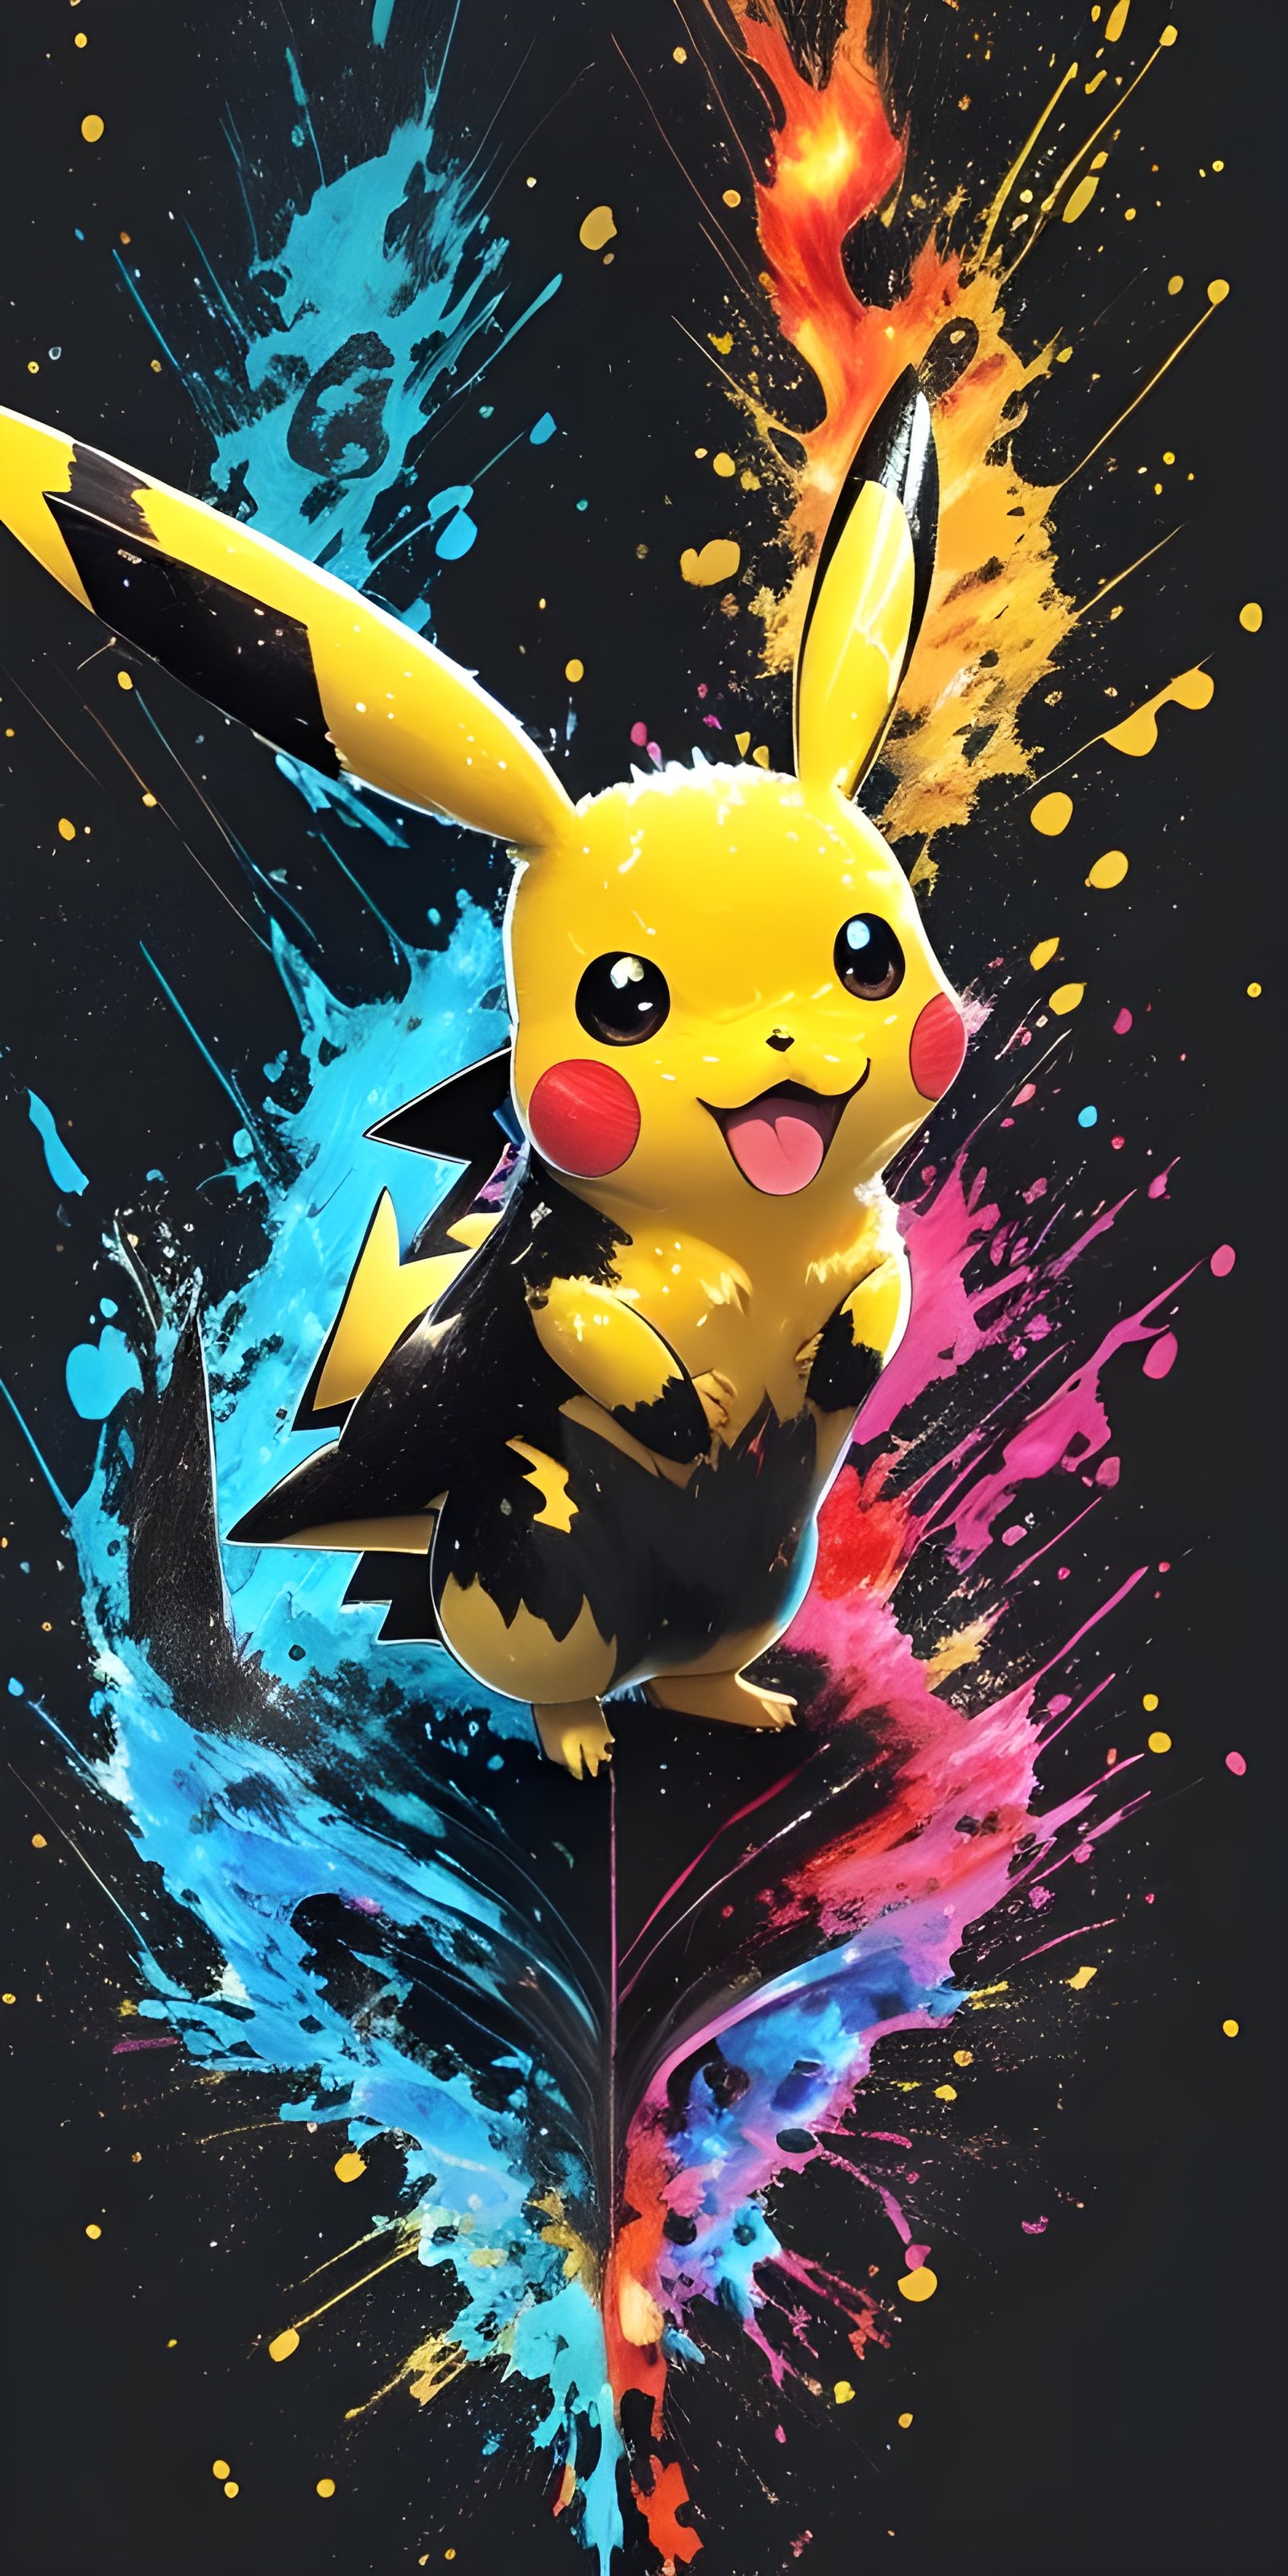 Pikachu Wallpaper for phone, Art, Vibrant Colors, Cartoon, Gaming